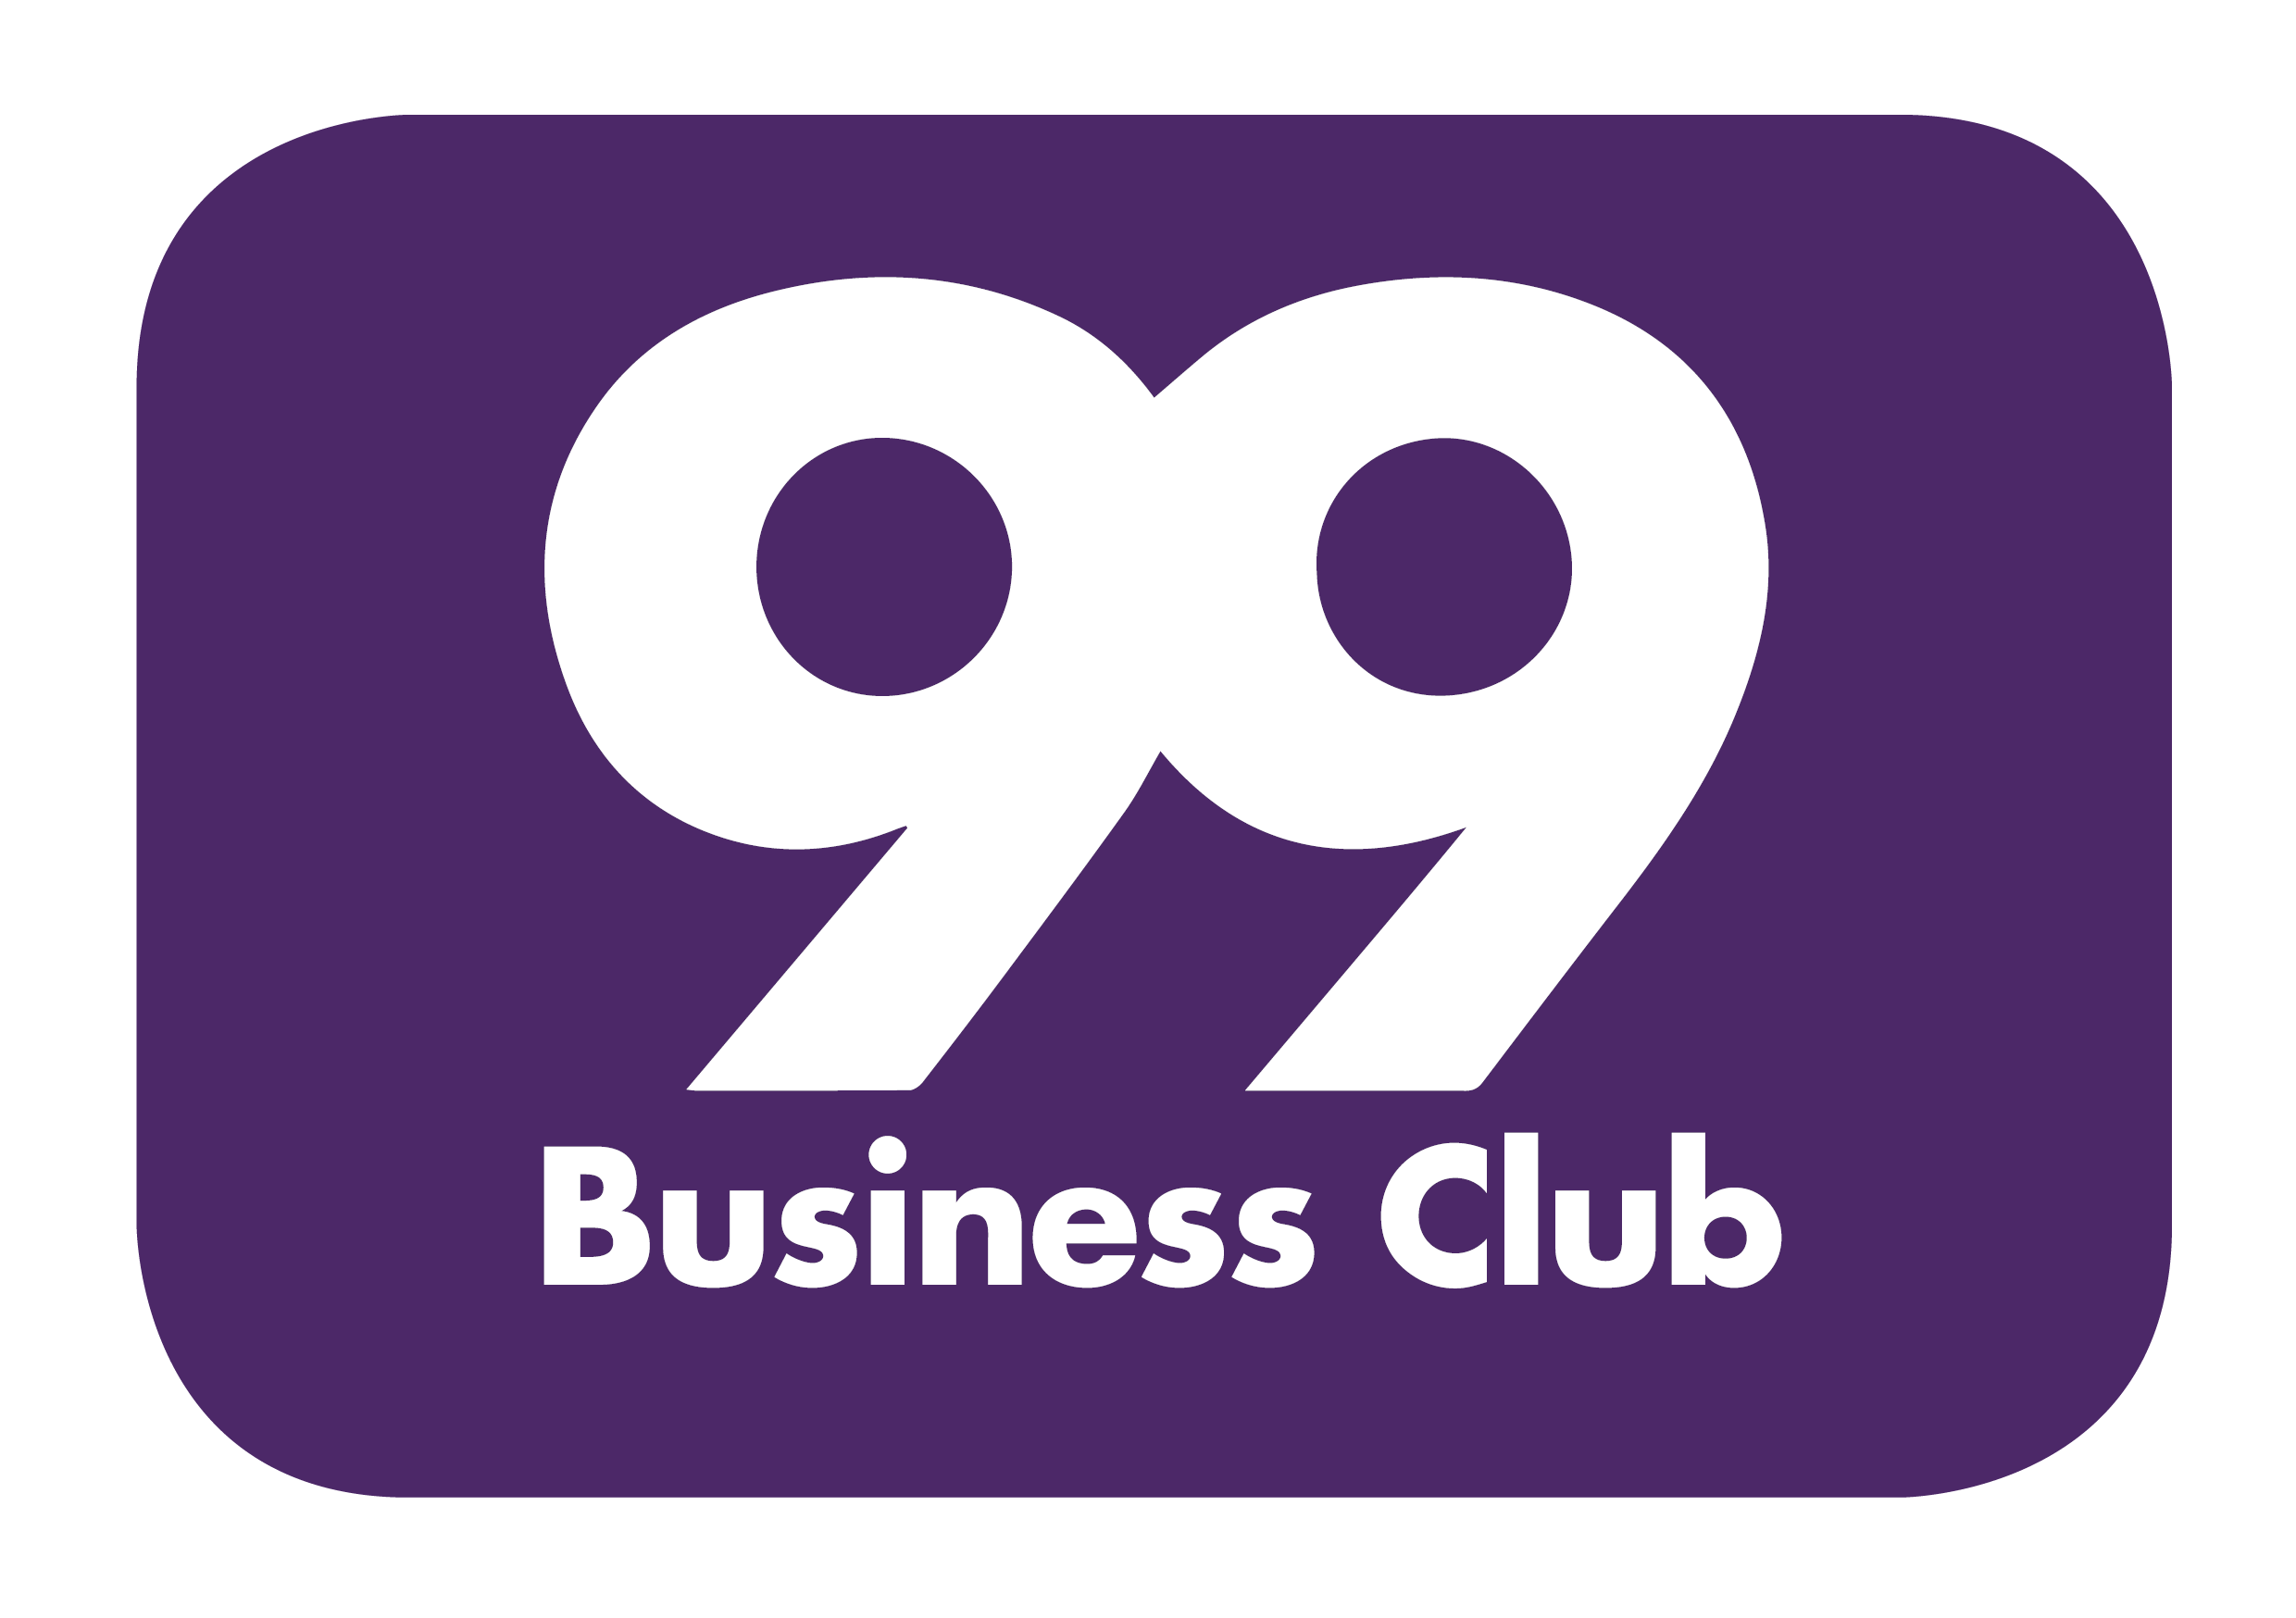 99 Business Club Logo